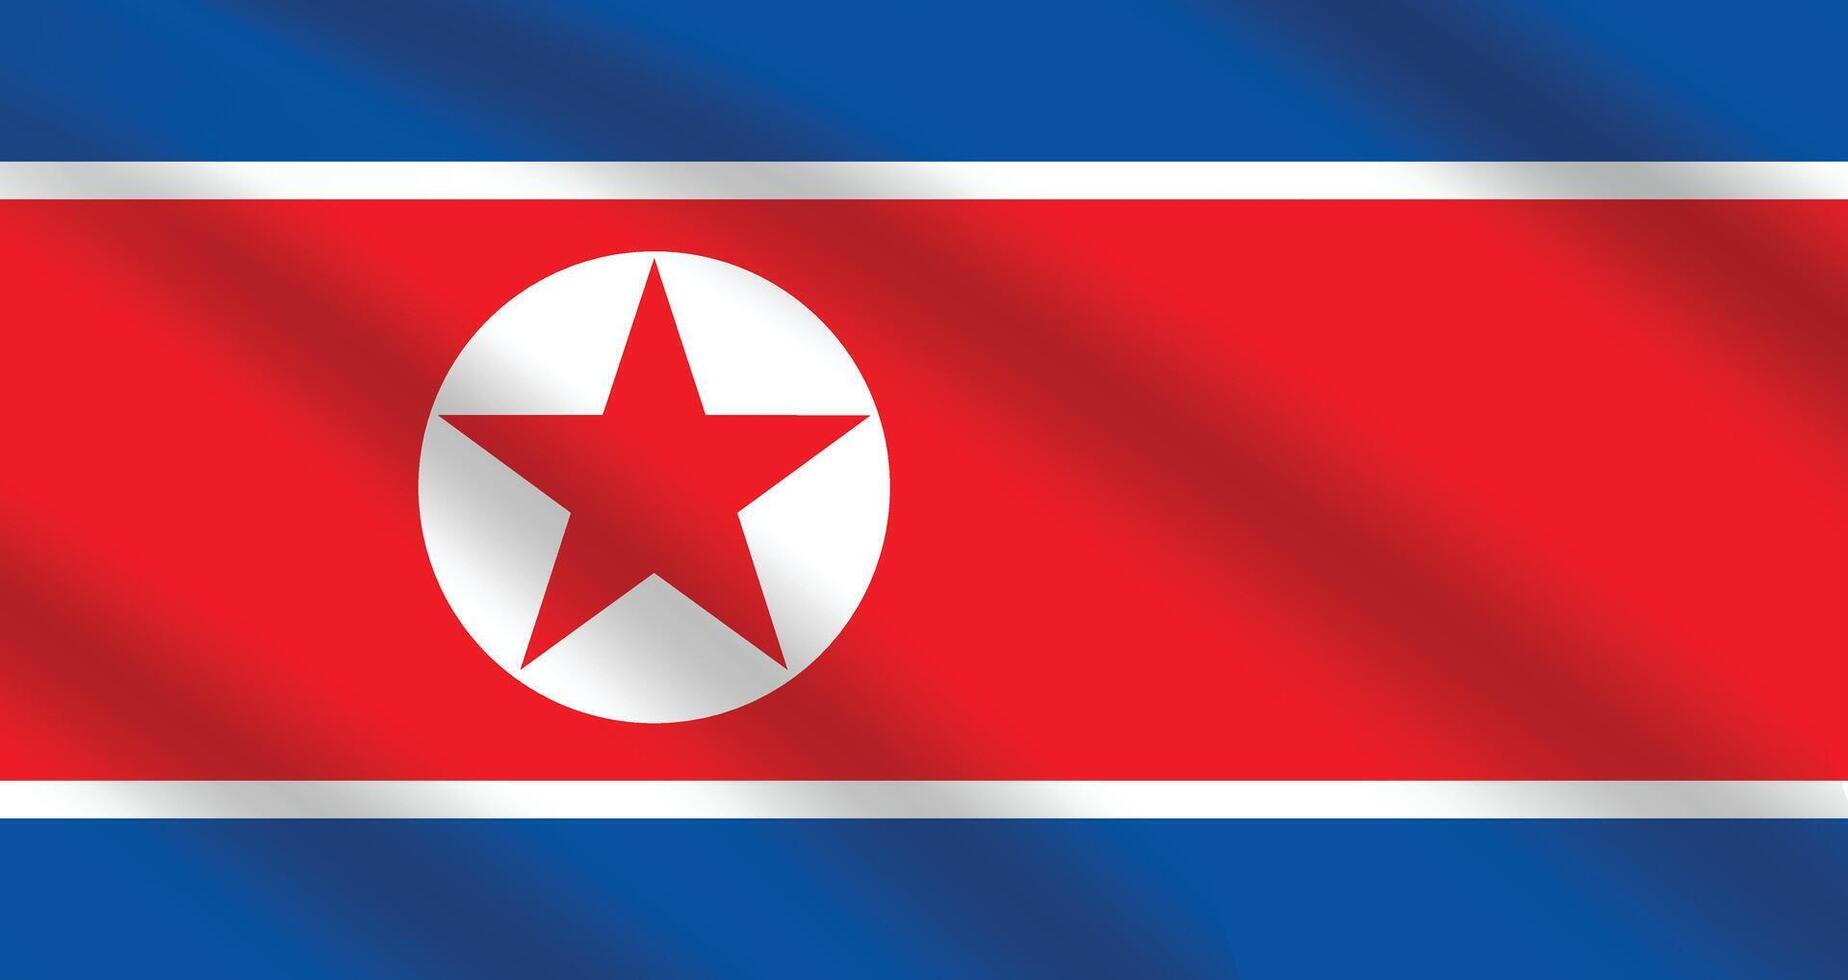 Flat Illustration of the North Korea national flag. North Korea flag design. North Korea wave flag. vector